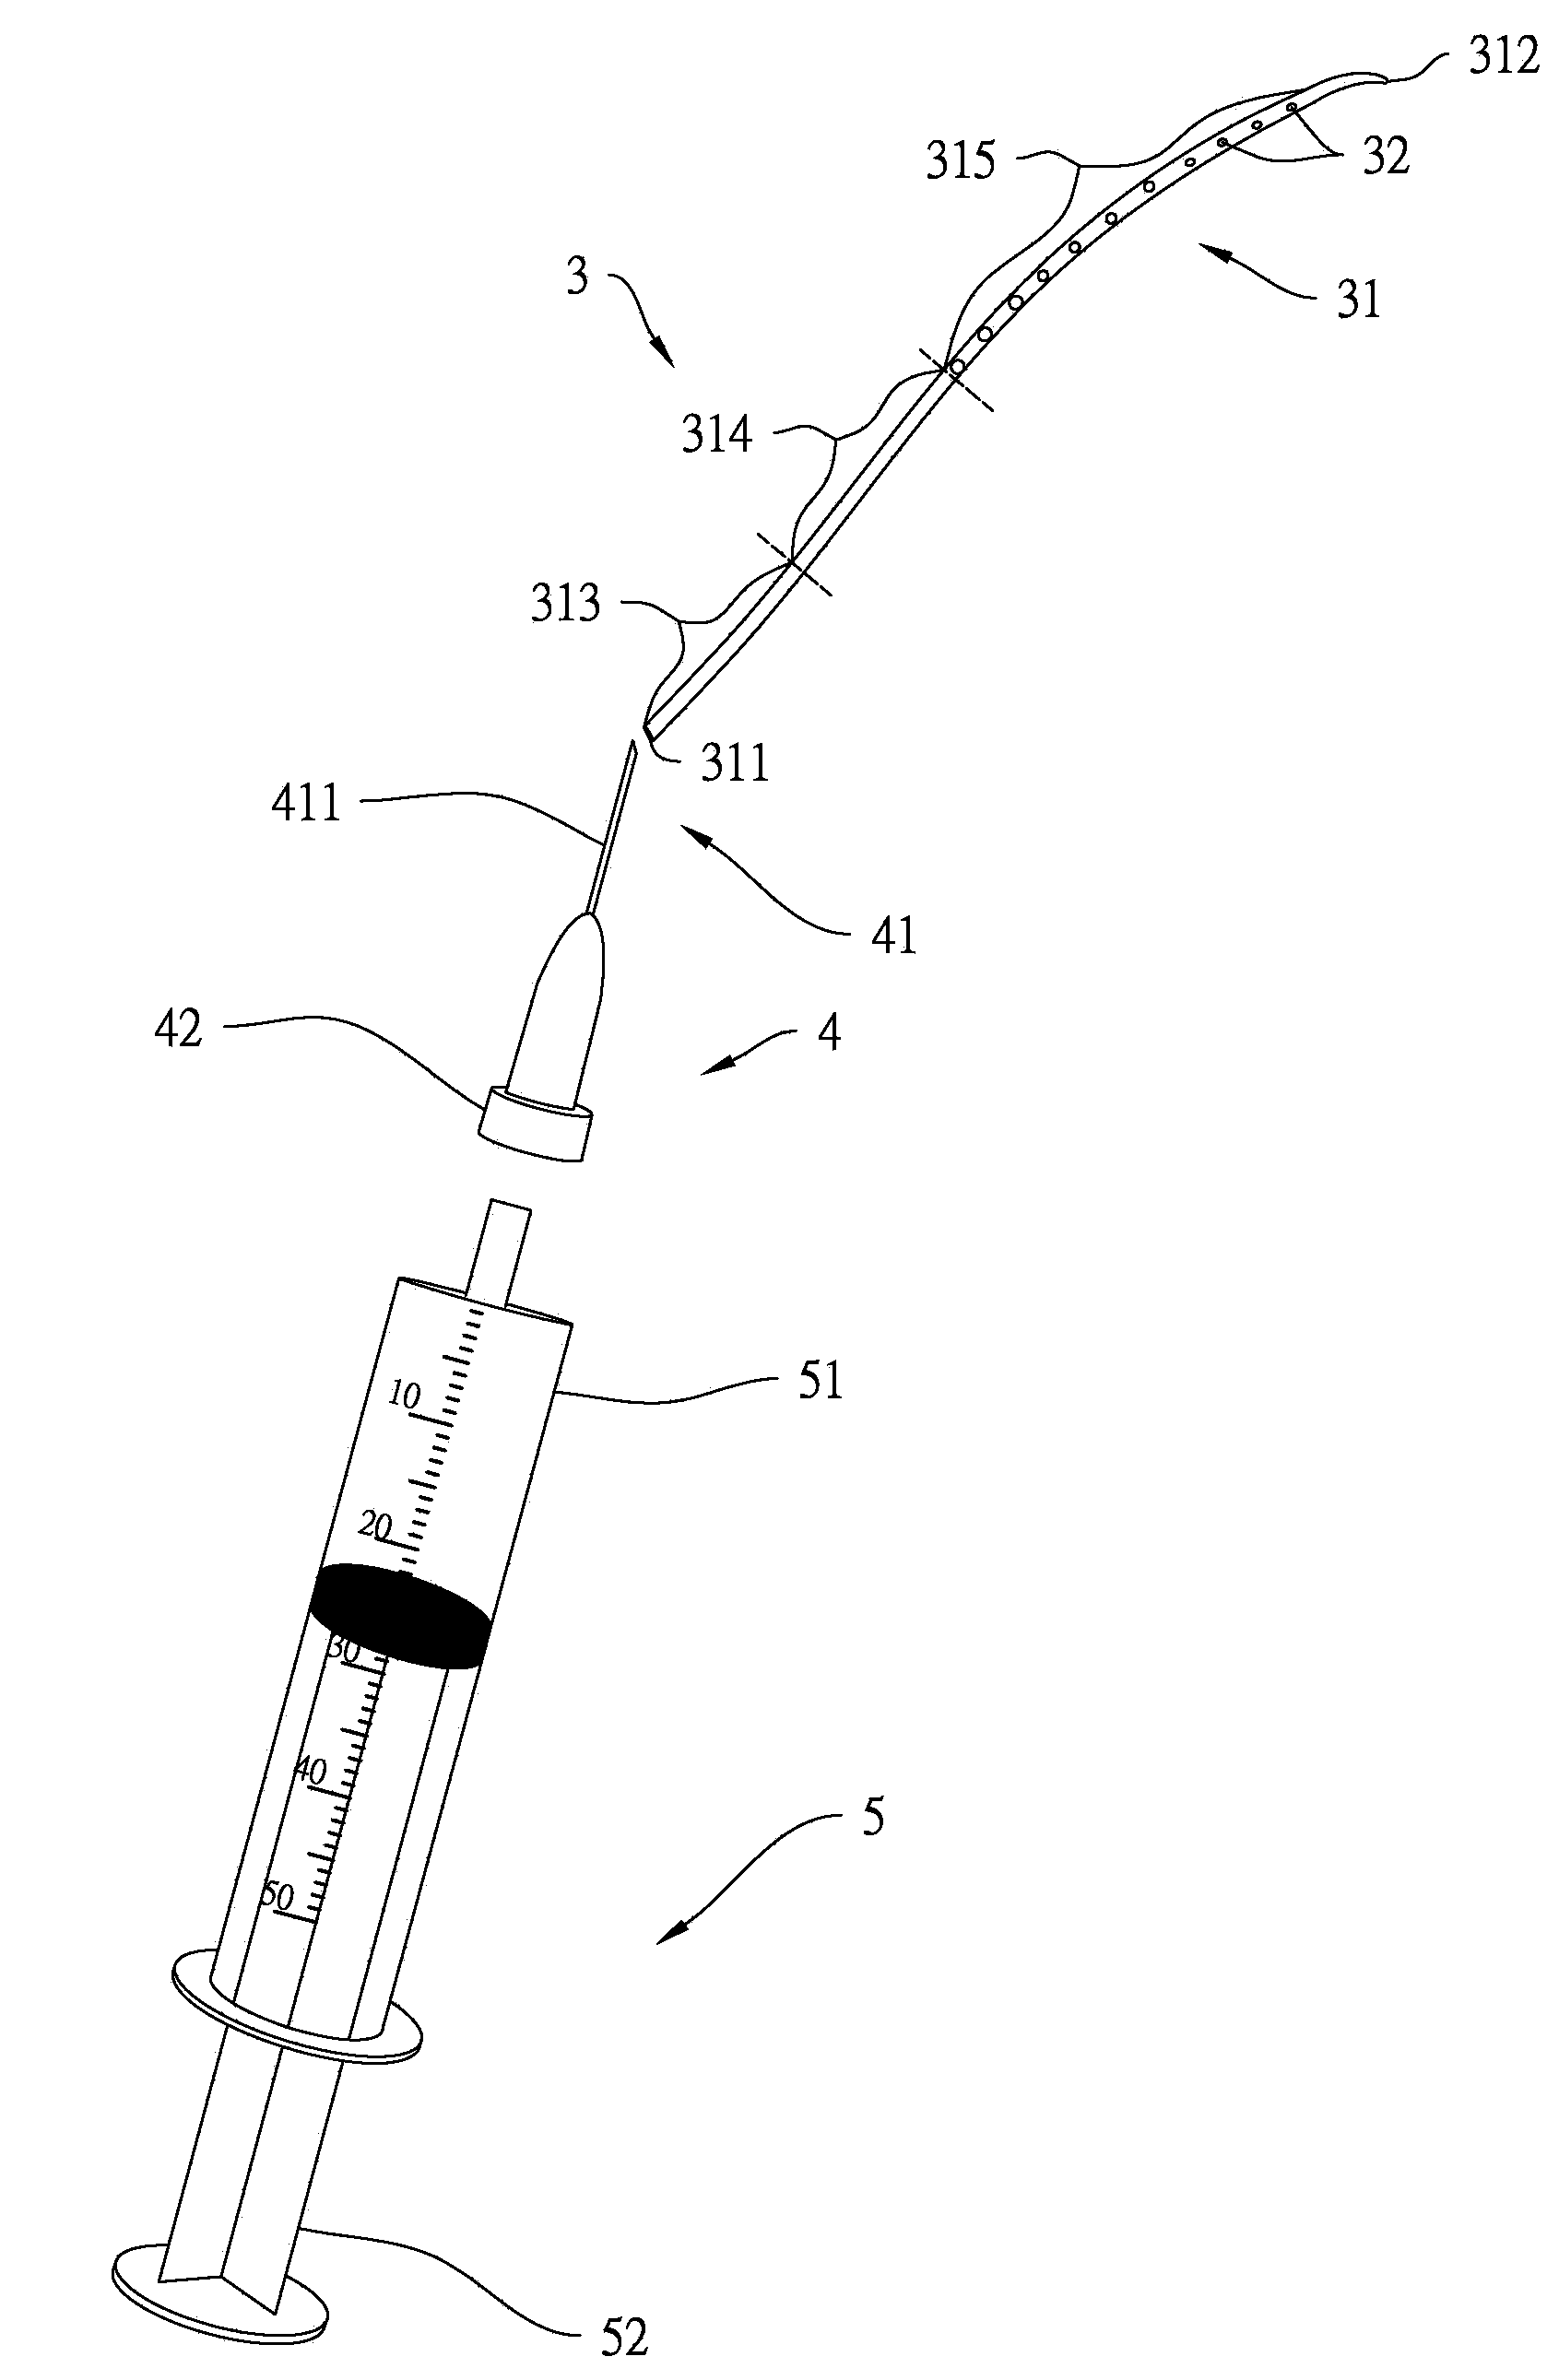 Nasal passage irrigation catheter device